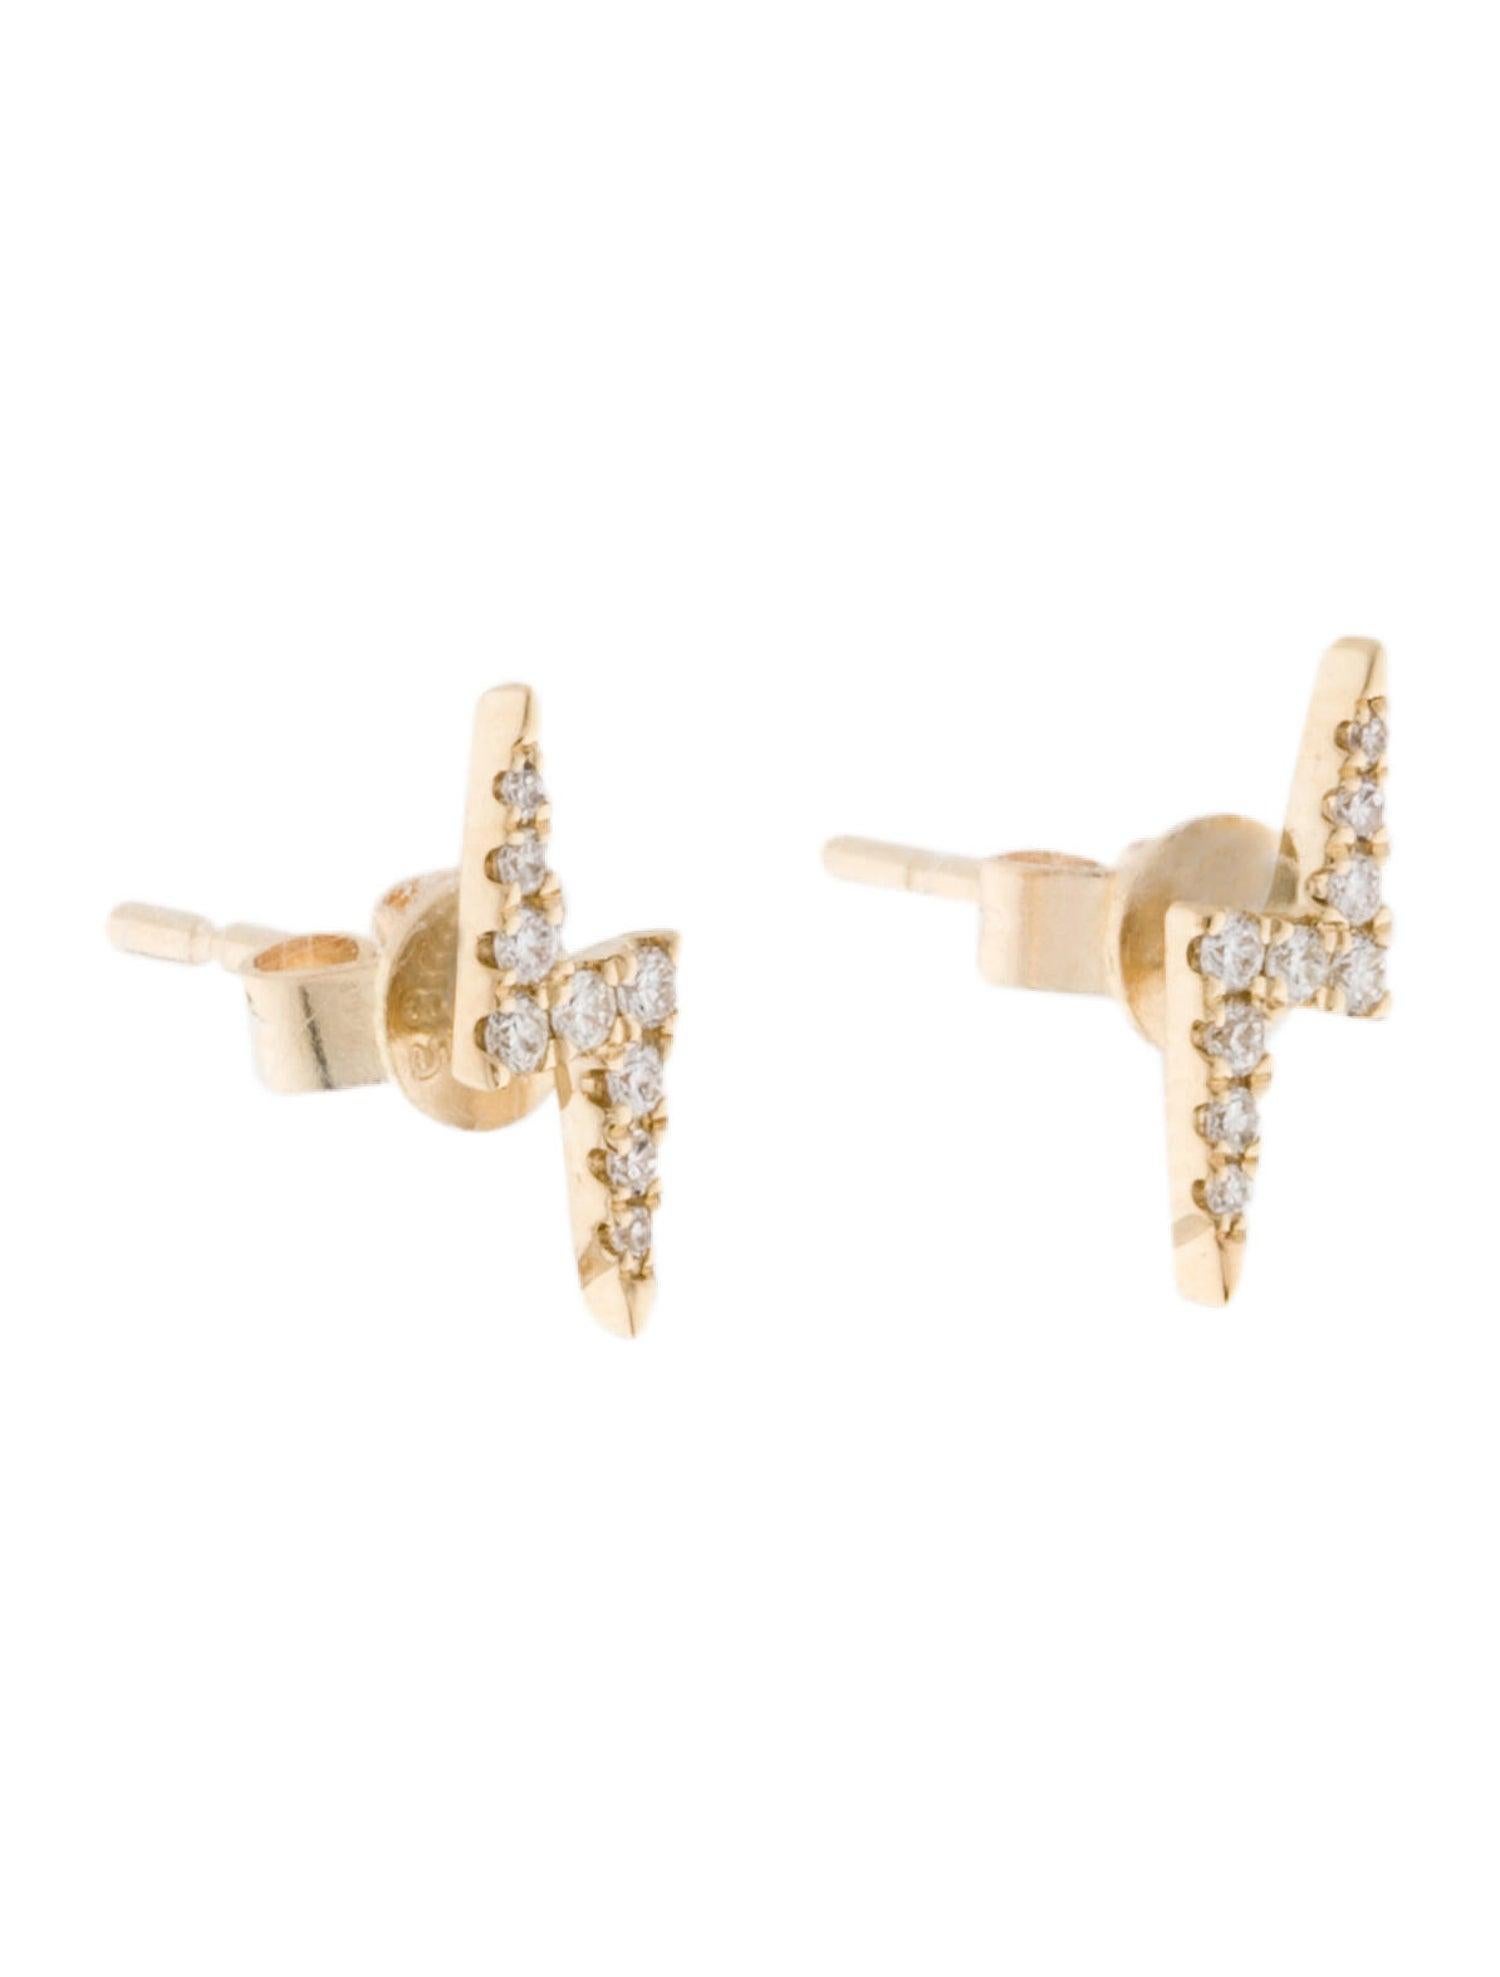 Contemporary 14K Yellow Gold 0.12 Carat Diamond Lightning Bolt Stud Earrings For Sale